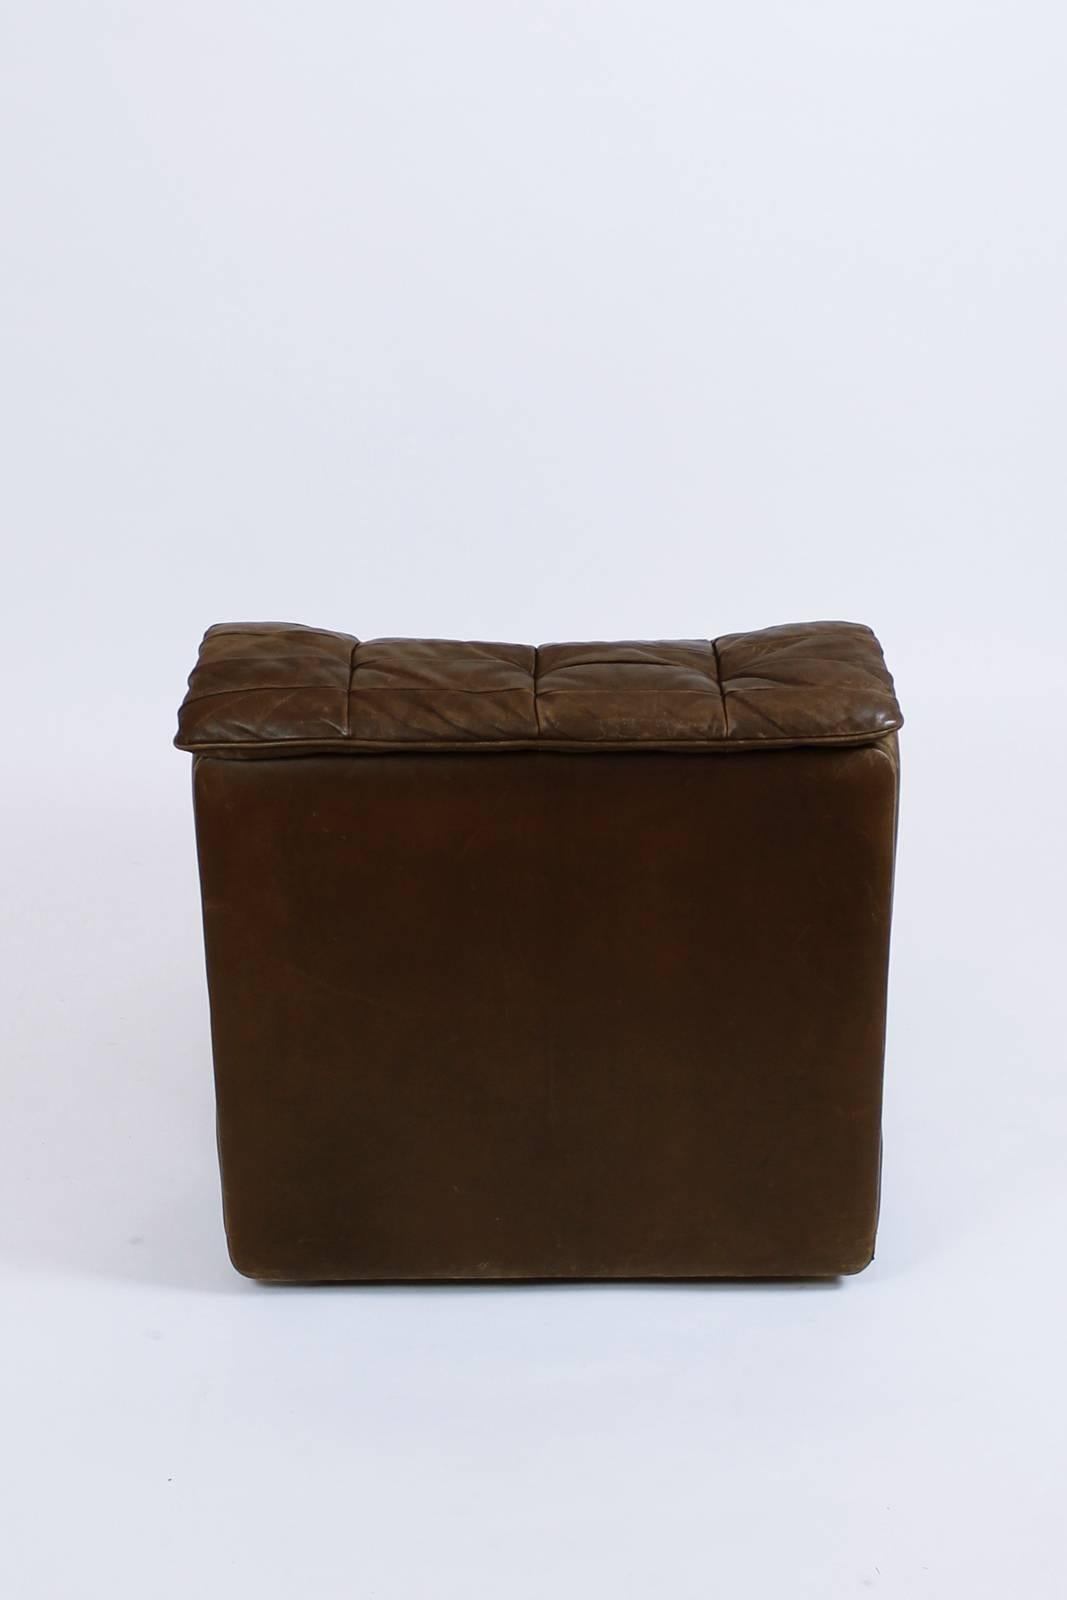 De Sede Model DS-11 Tufted Dark brown Leather Modular Sofa, Switzerland, 1970 2